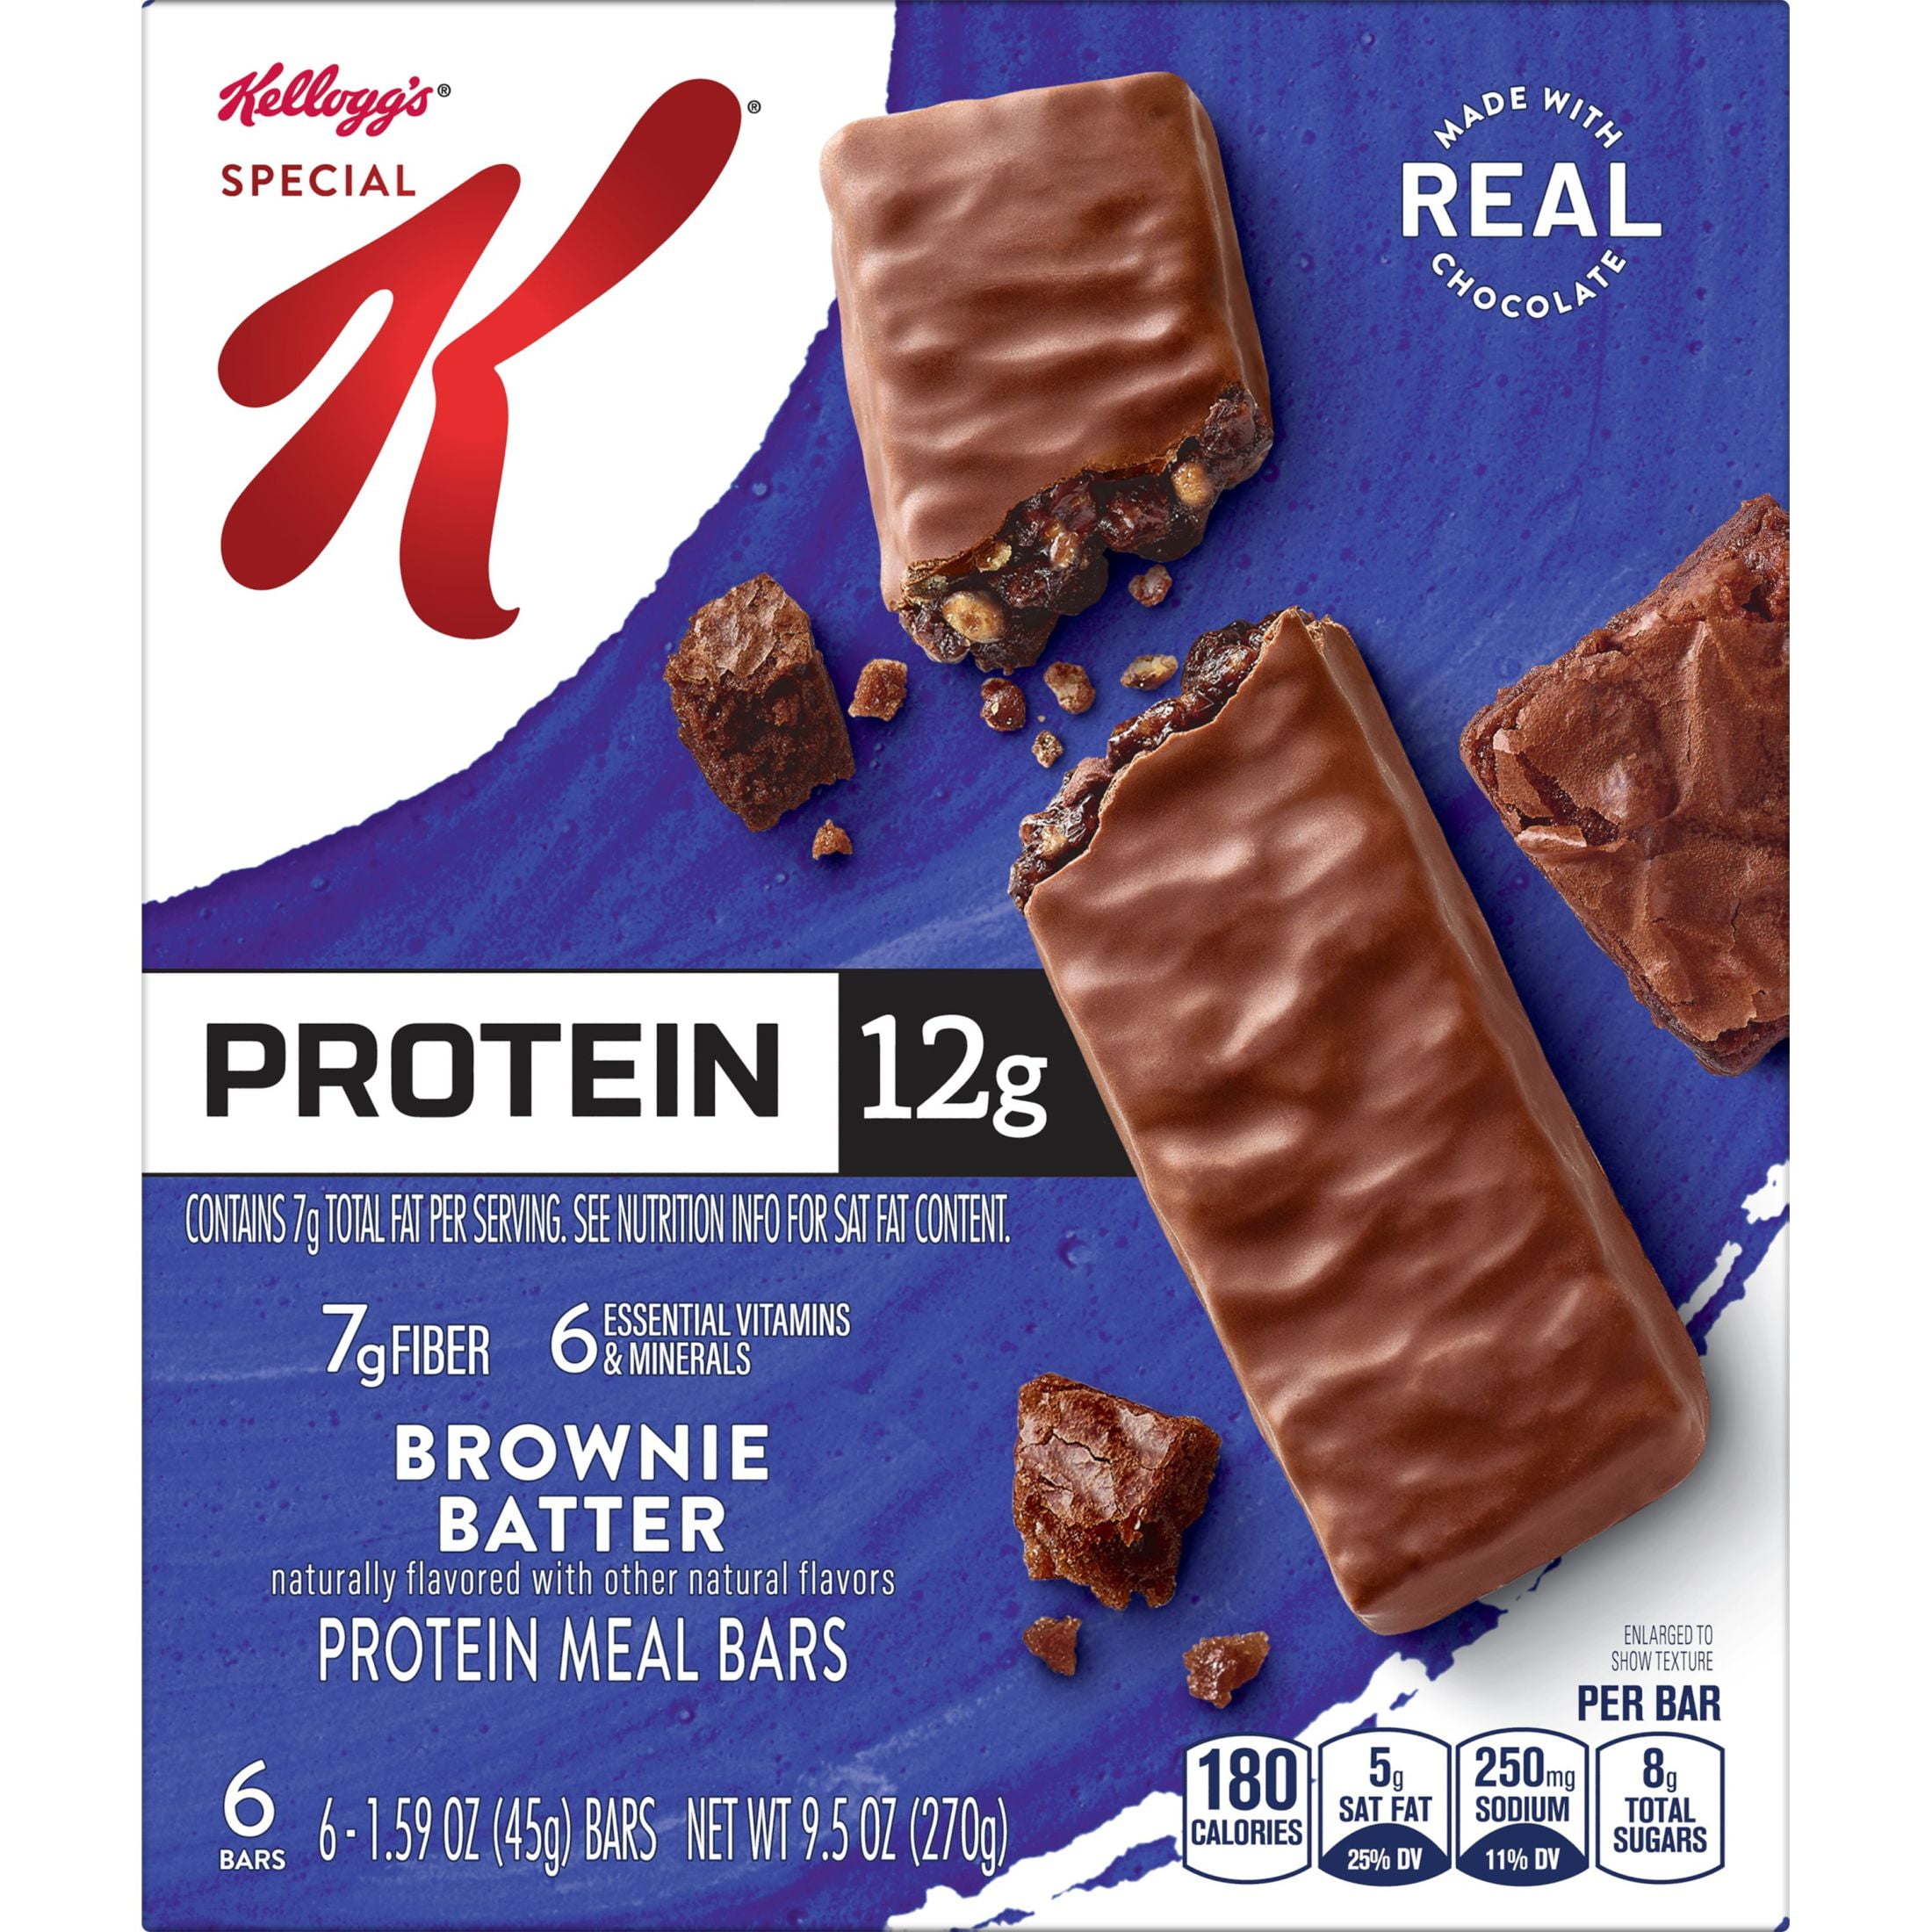 Chocolate Brownie 20g Protein Bar Box (Pack of 6) – Yoga Bars